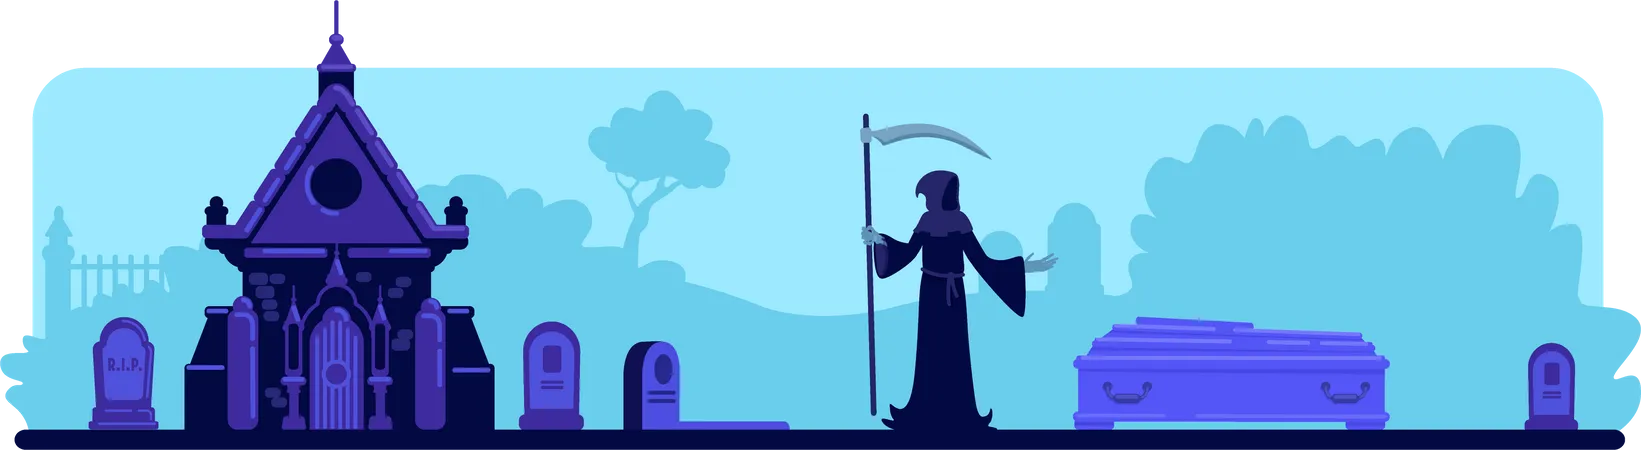 Grim reaper at cemetery  Illustration